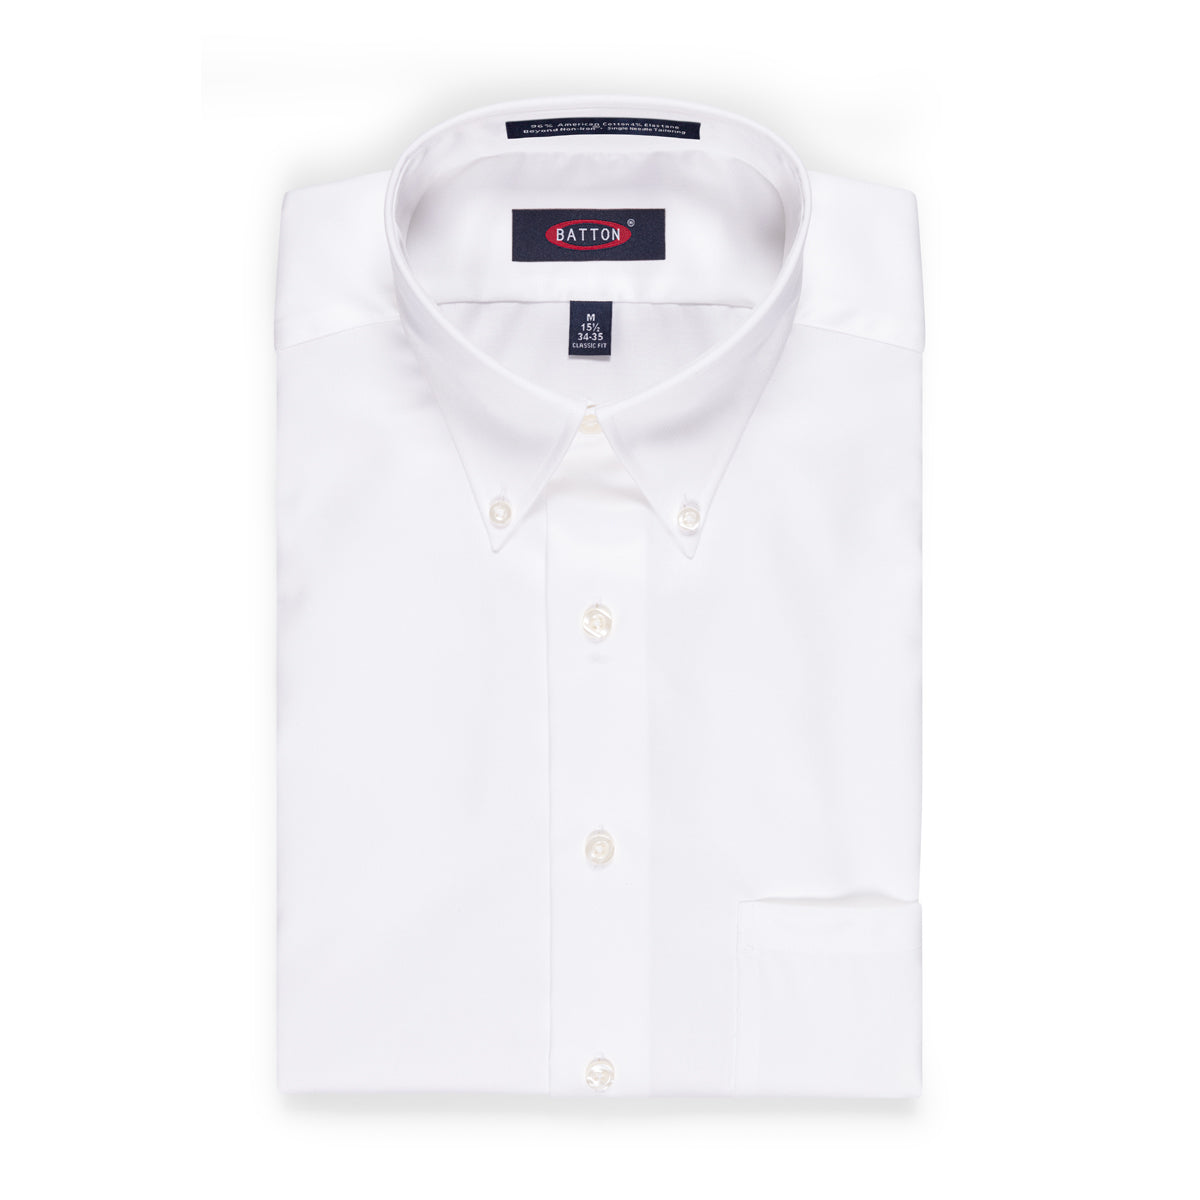 'Arthur' Beyond Non-Iron® Stretch Cotton Dress Shirt with Button Down Collar in White by Batton